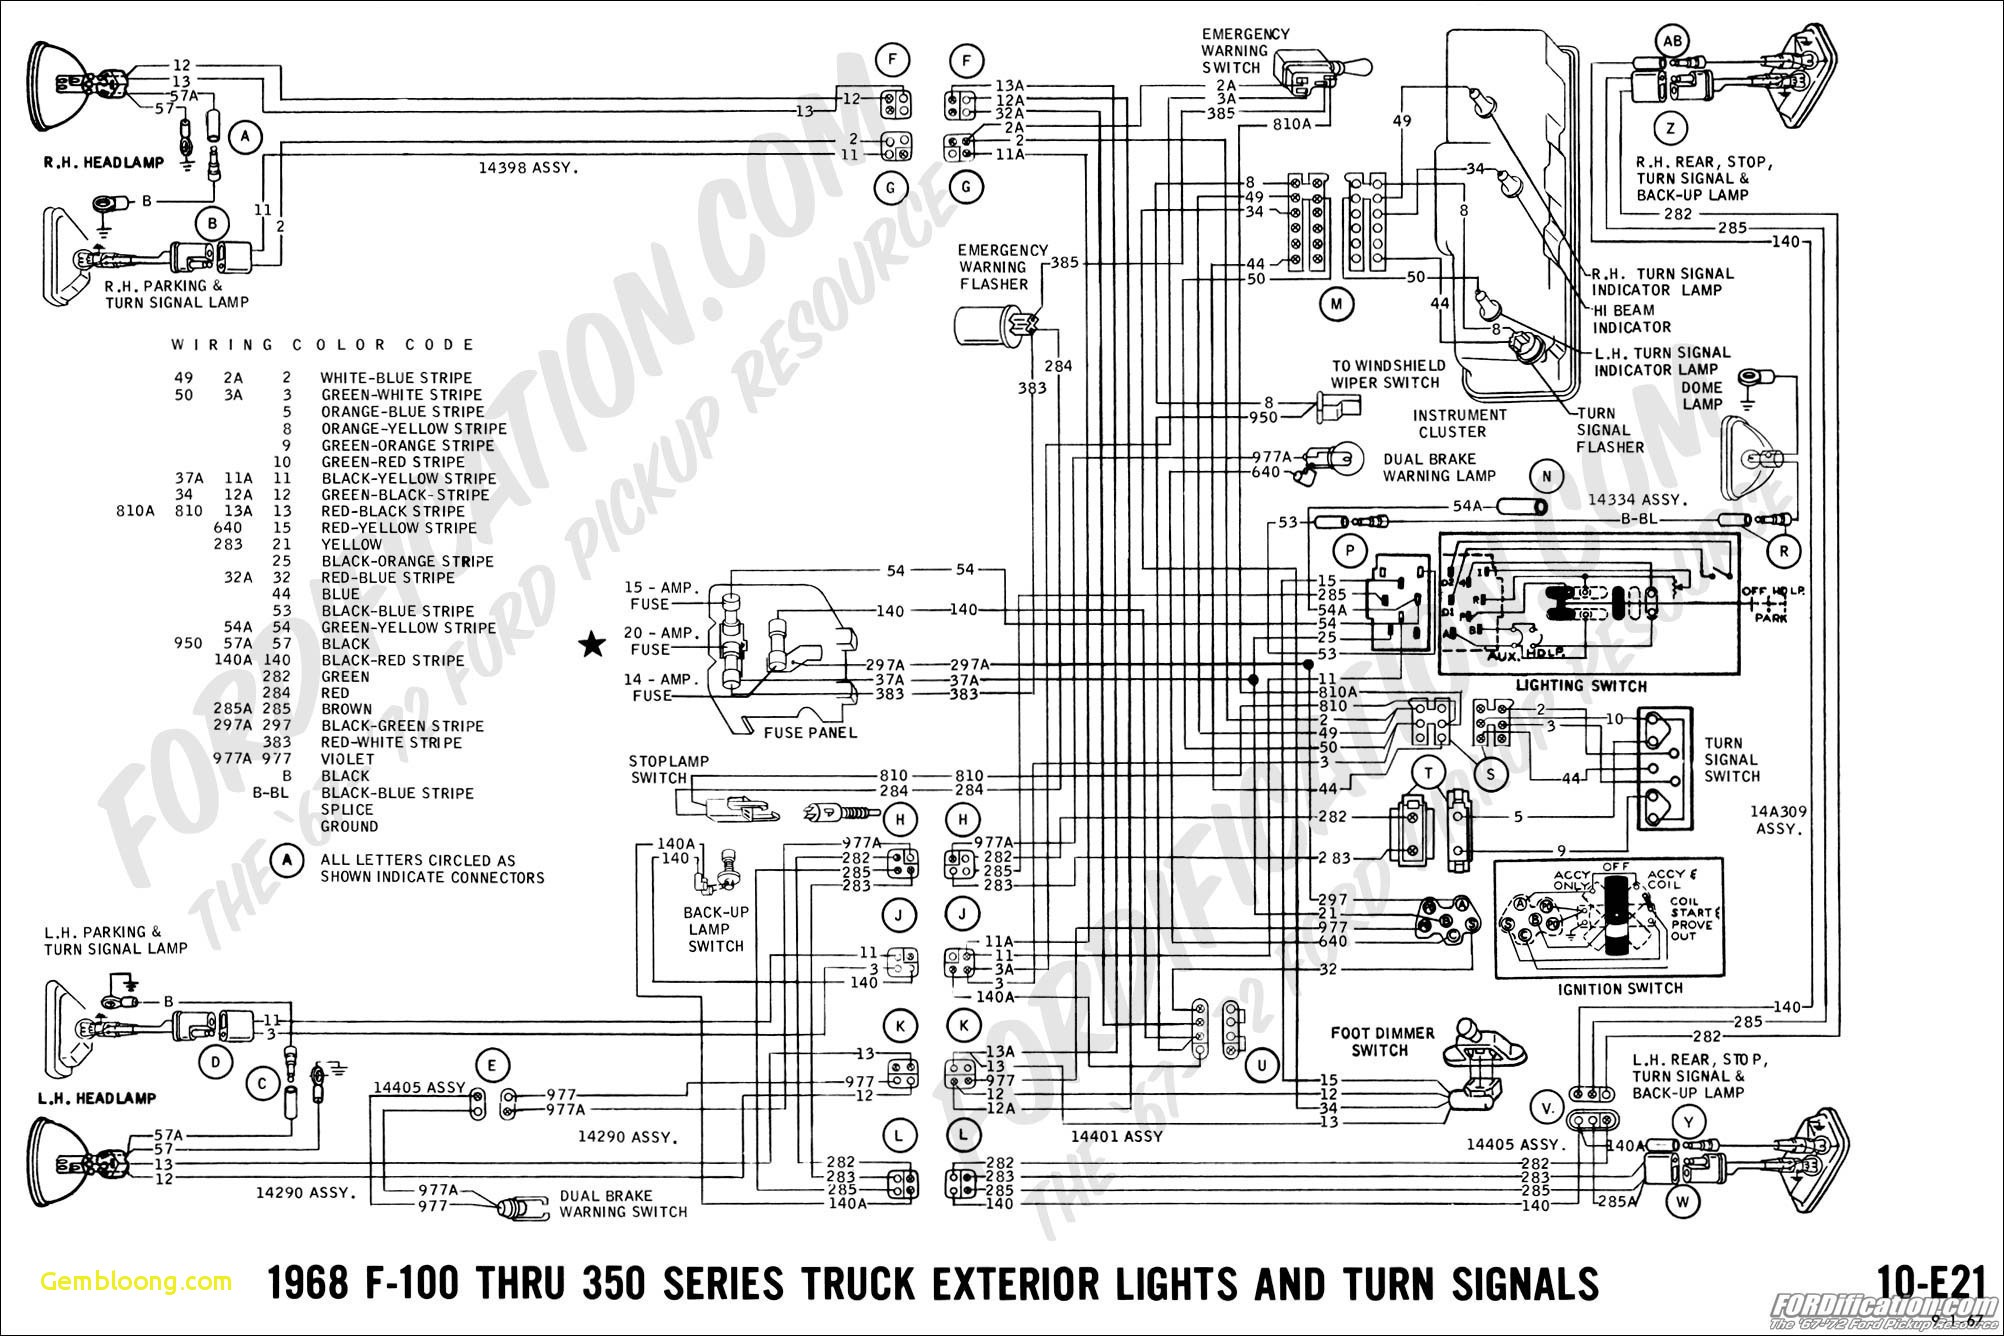 Truck Loading Diagram Download ford Trucks Wiring Diagrams ford Truck Wiring Diagrams Of Truck Loading Diagram